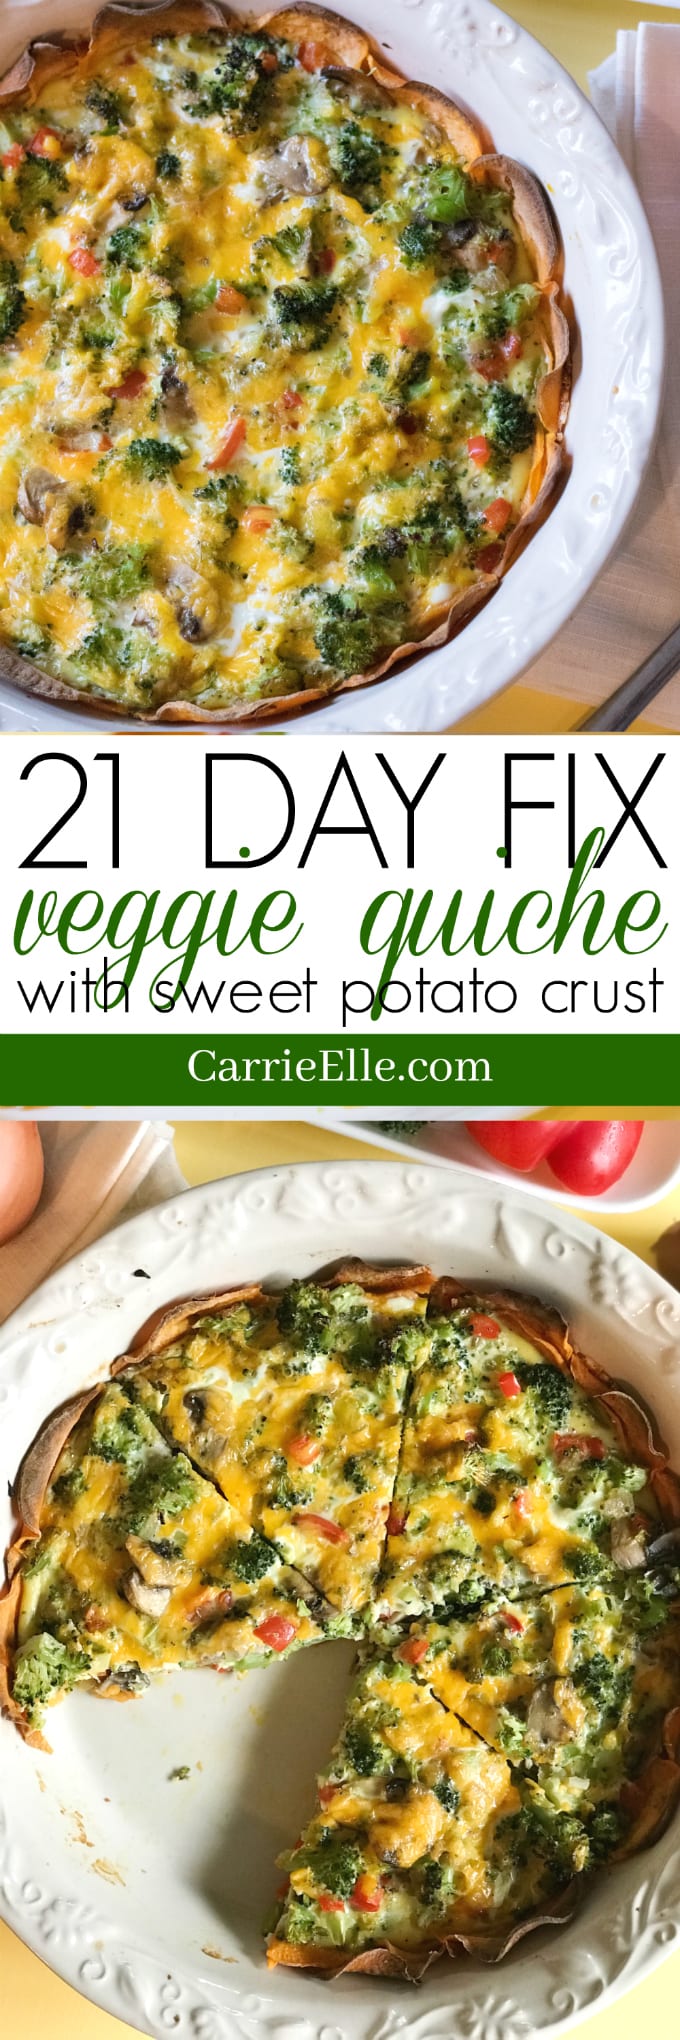 21 Day Fix Veggie Quiche